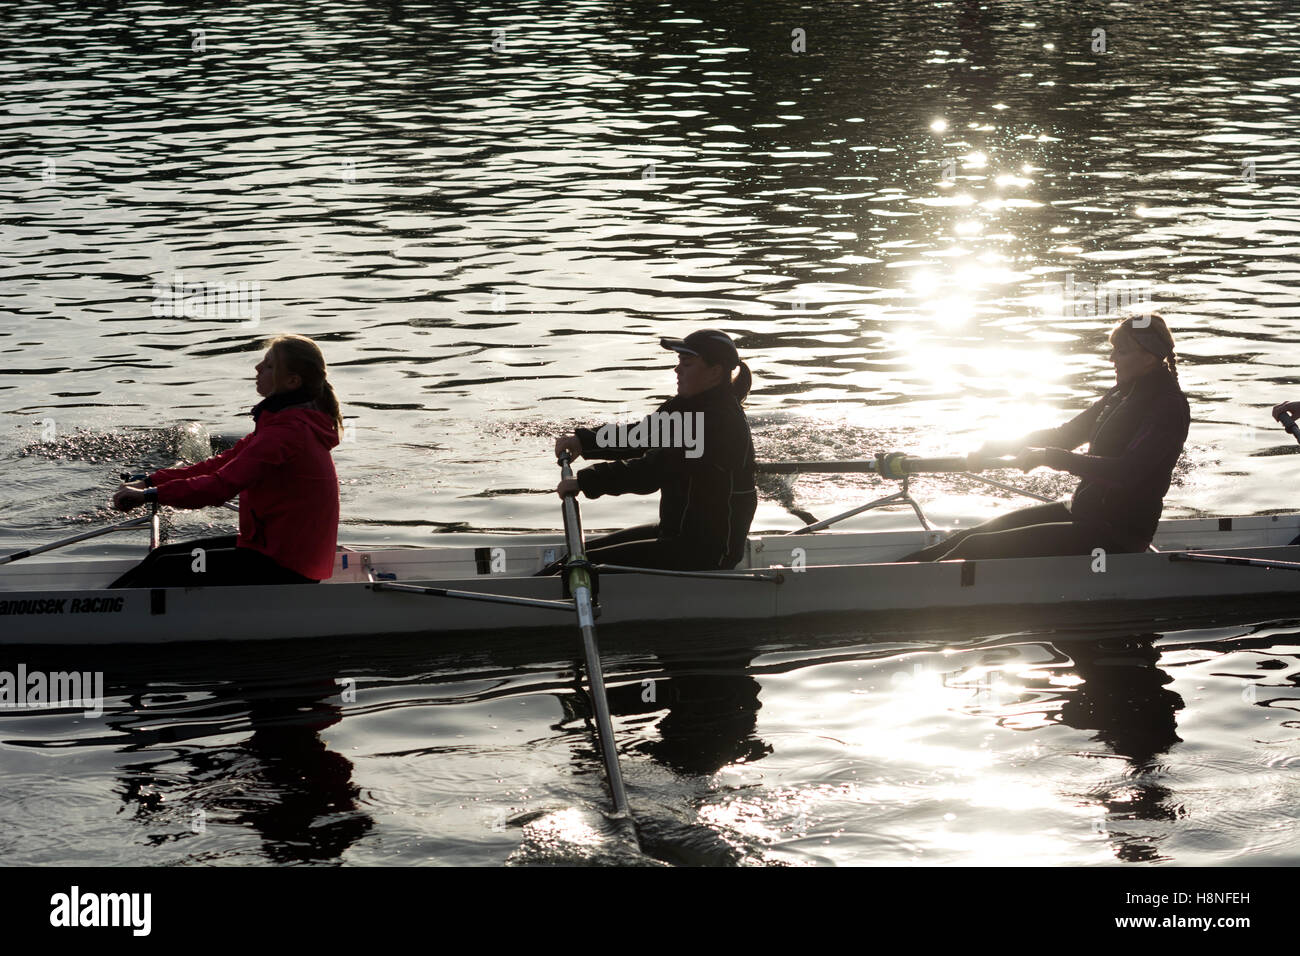 Women rowers training on the River Avon, Stratford-upon-Avon, UK Stock Photo